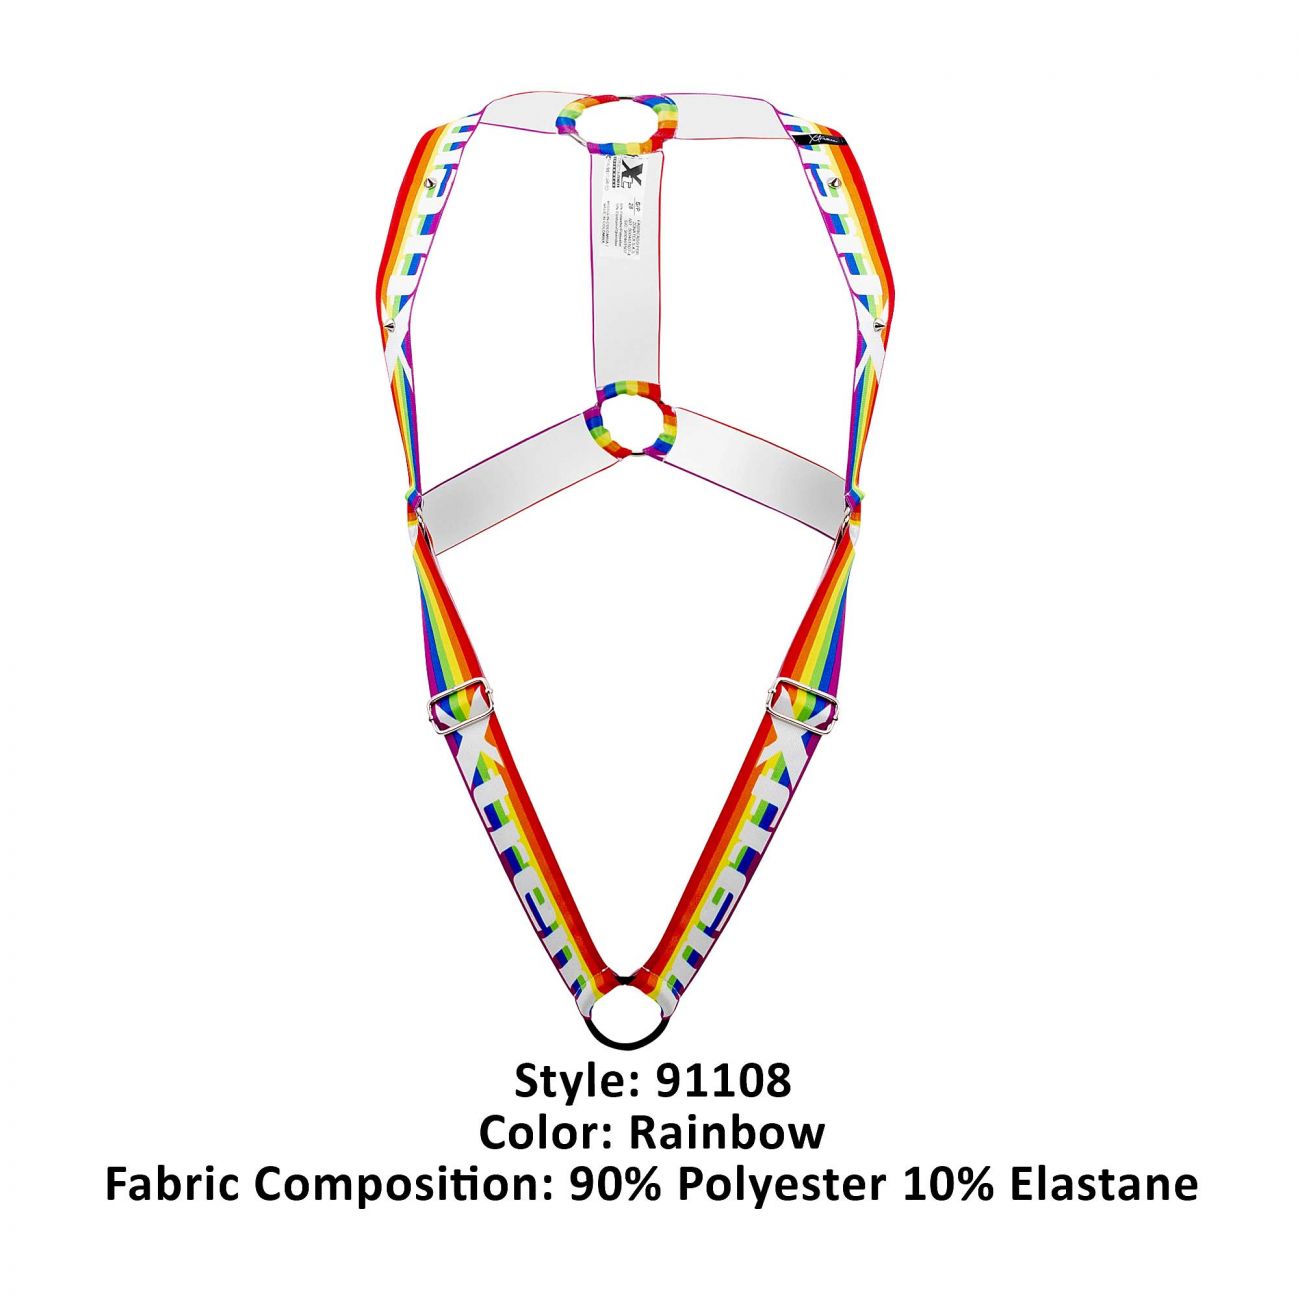 Xtremen 91108 C-Ring Harness Rainbow